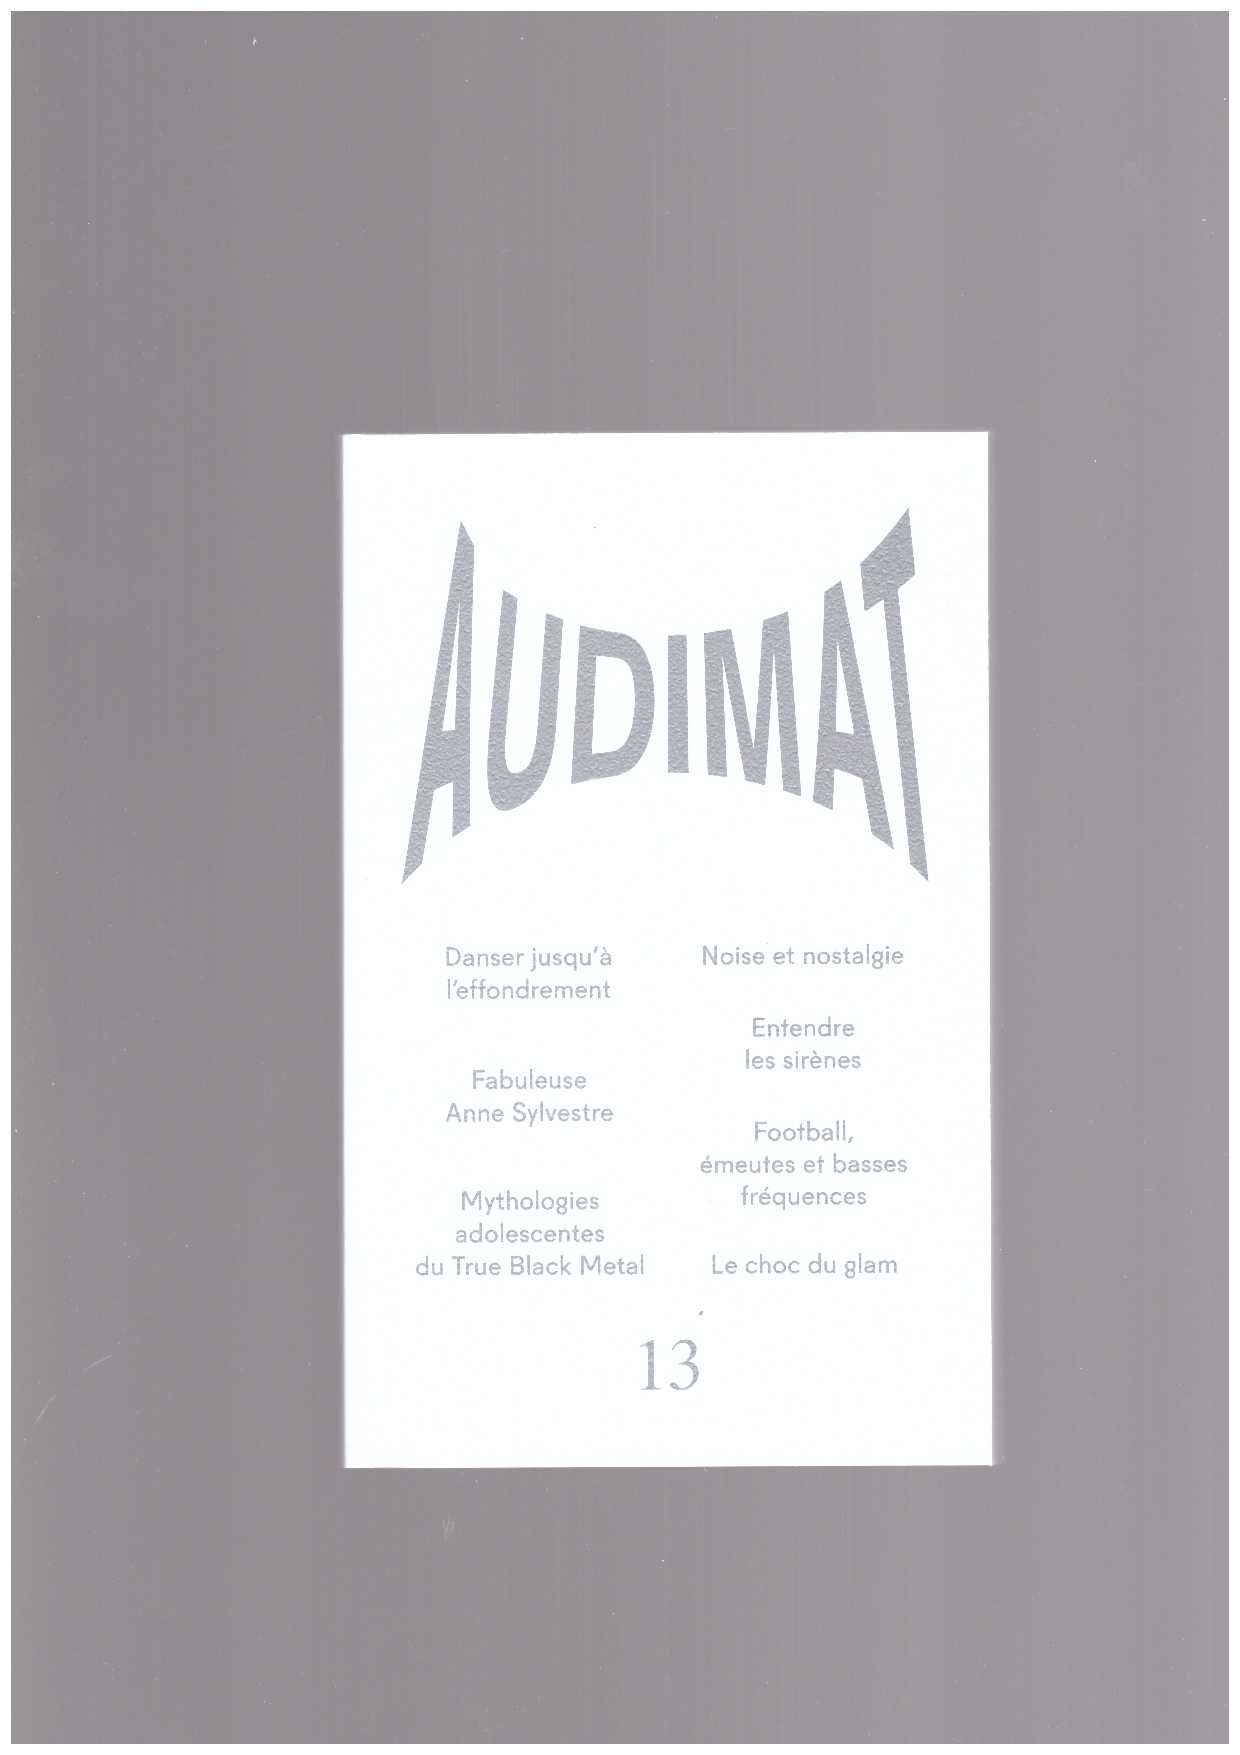 HEUGUET, Guillaume; MENU, Étienne (eds.) - Audimat #13